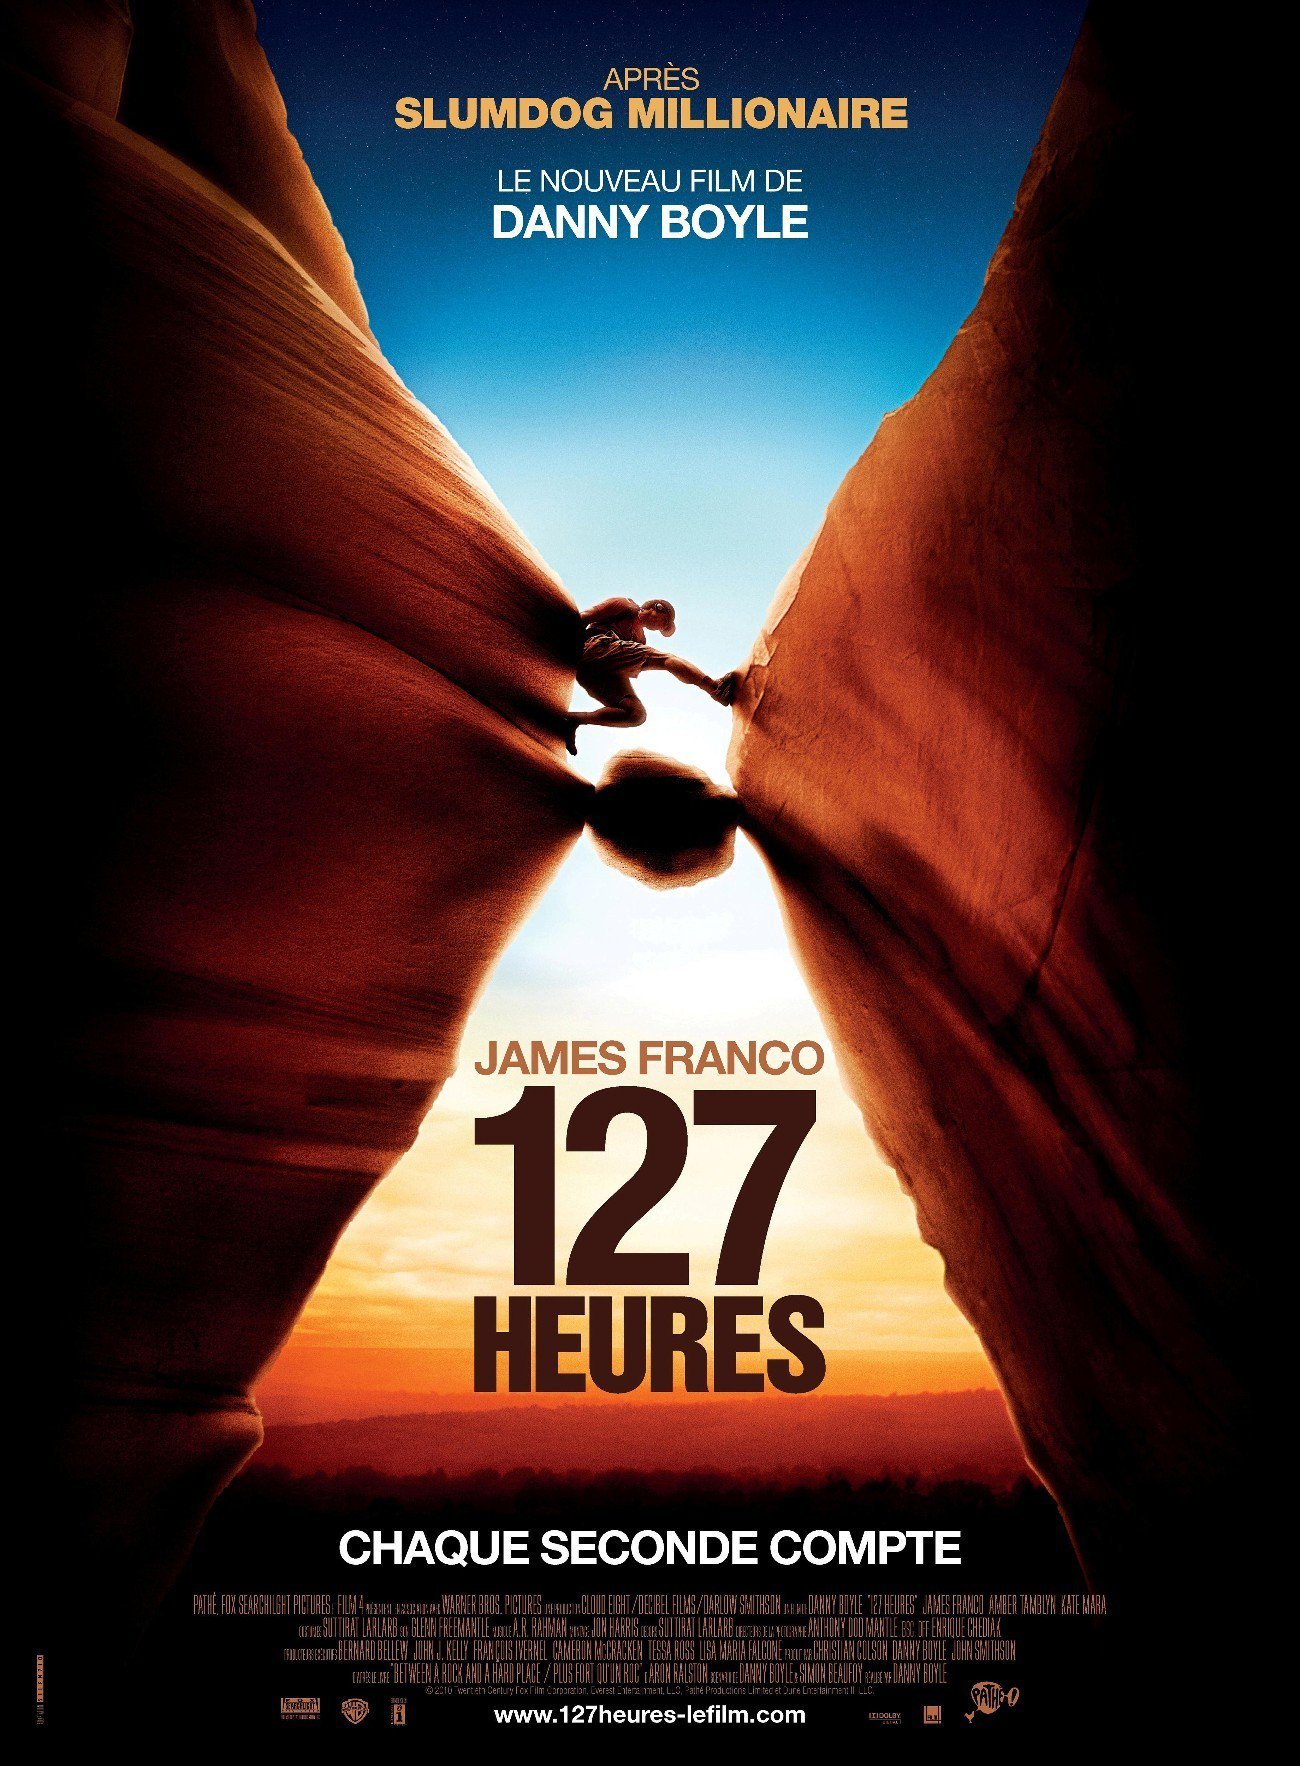 Affiche du film "127 Heures"